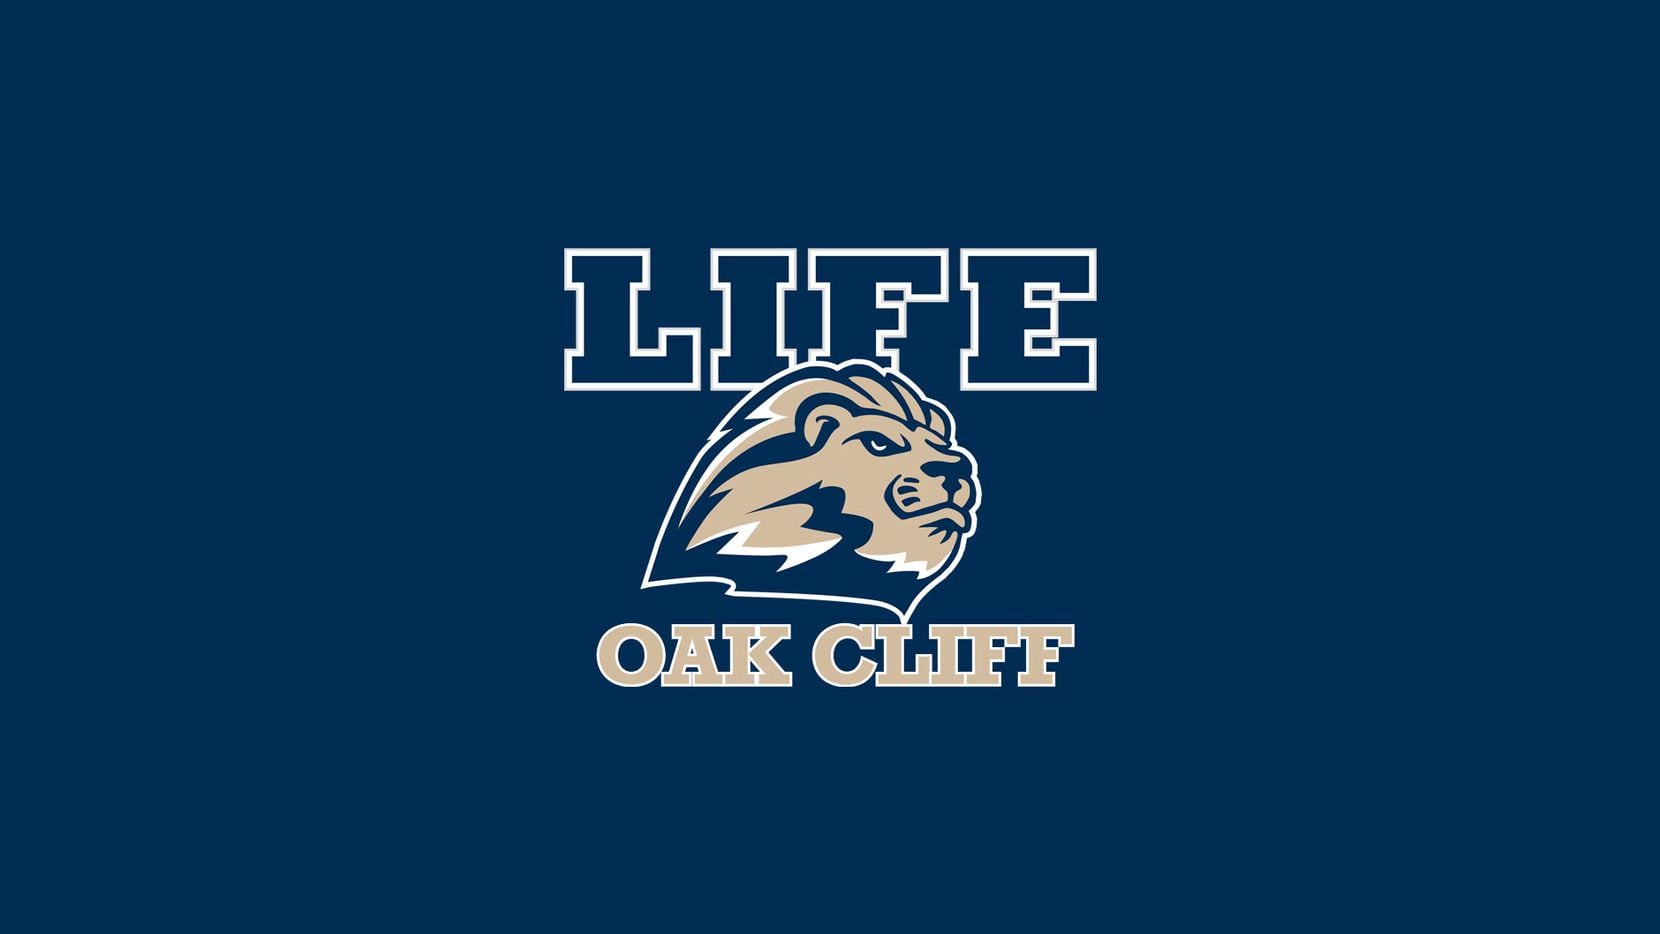 Life Oak Cliff logo.